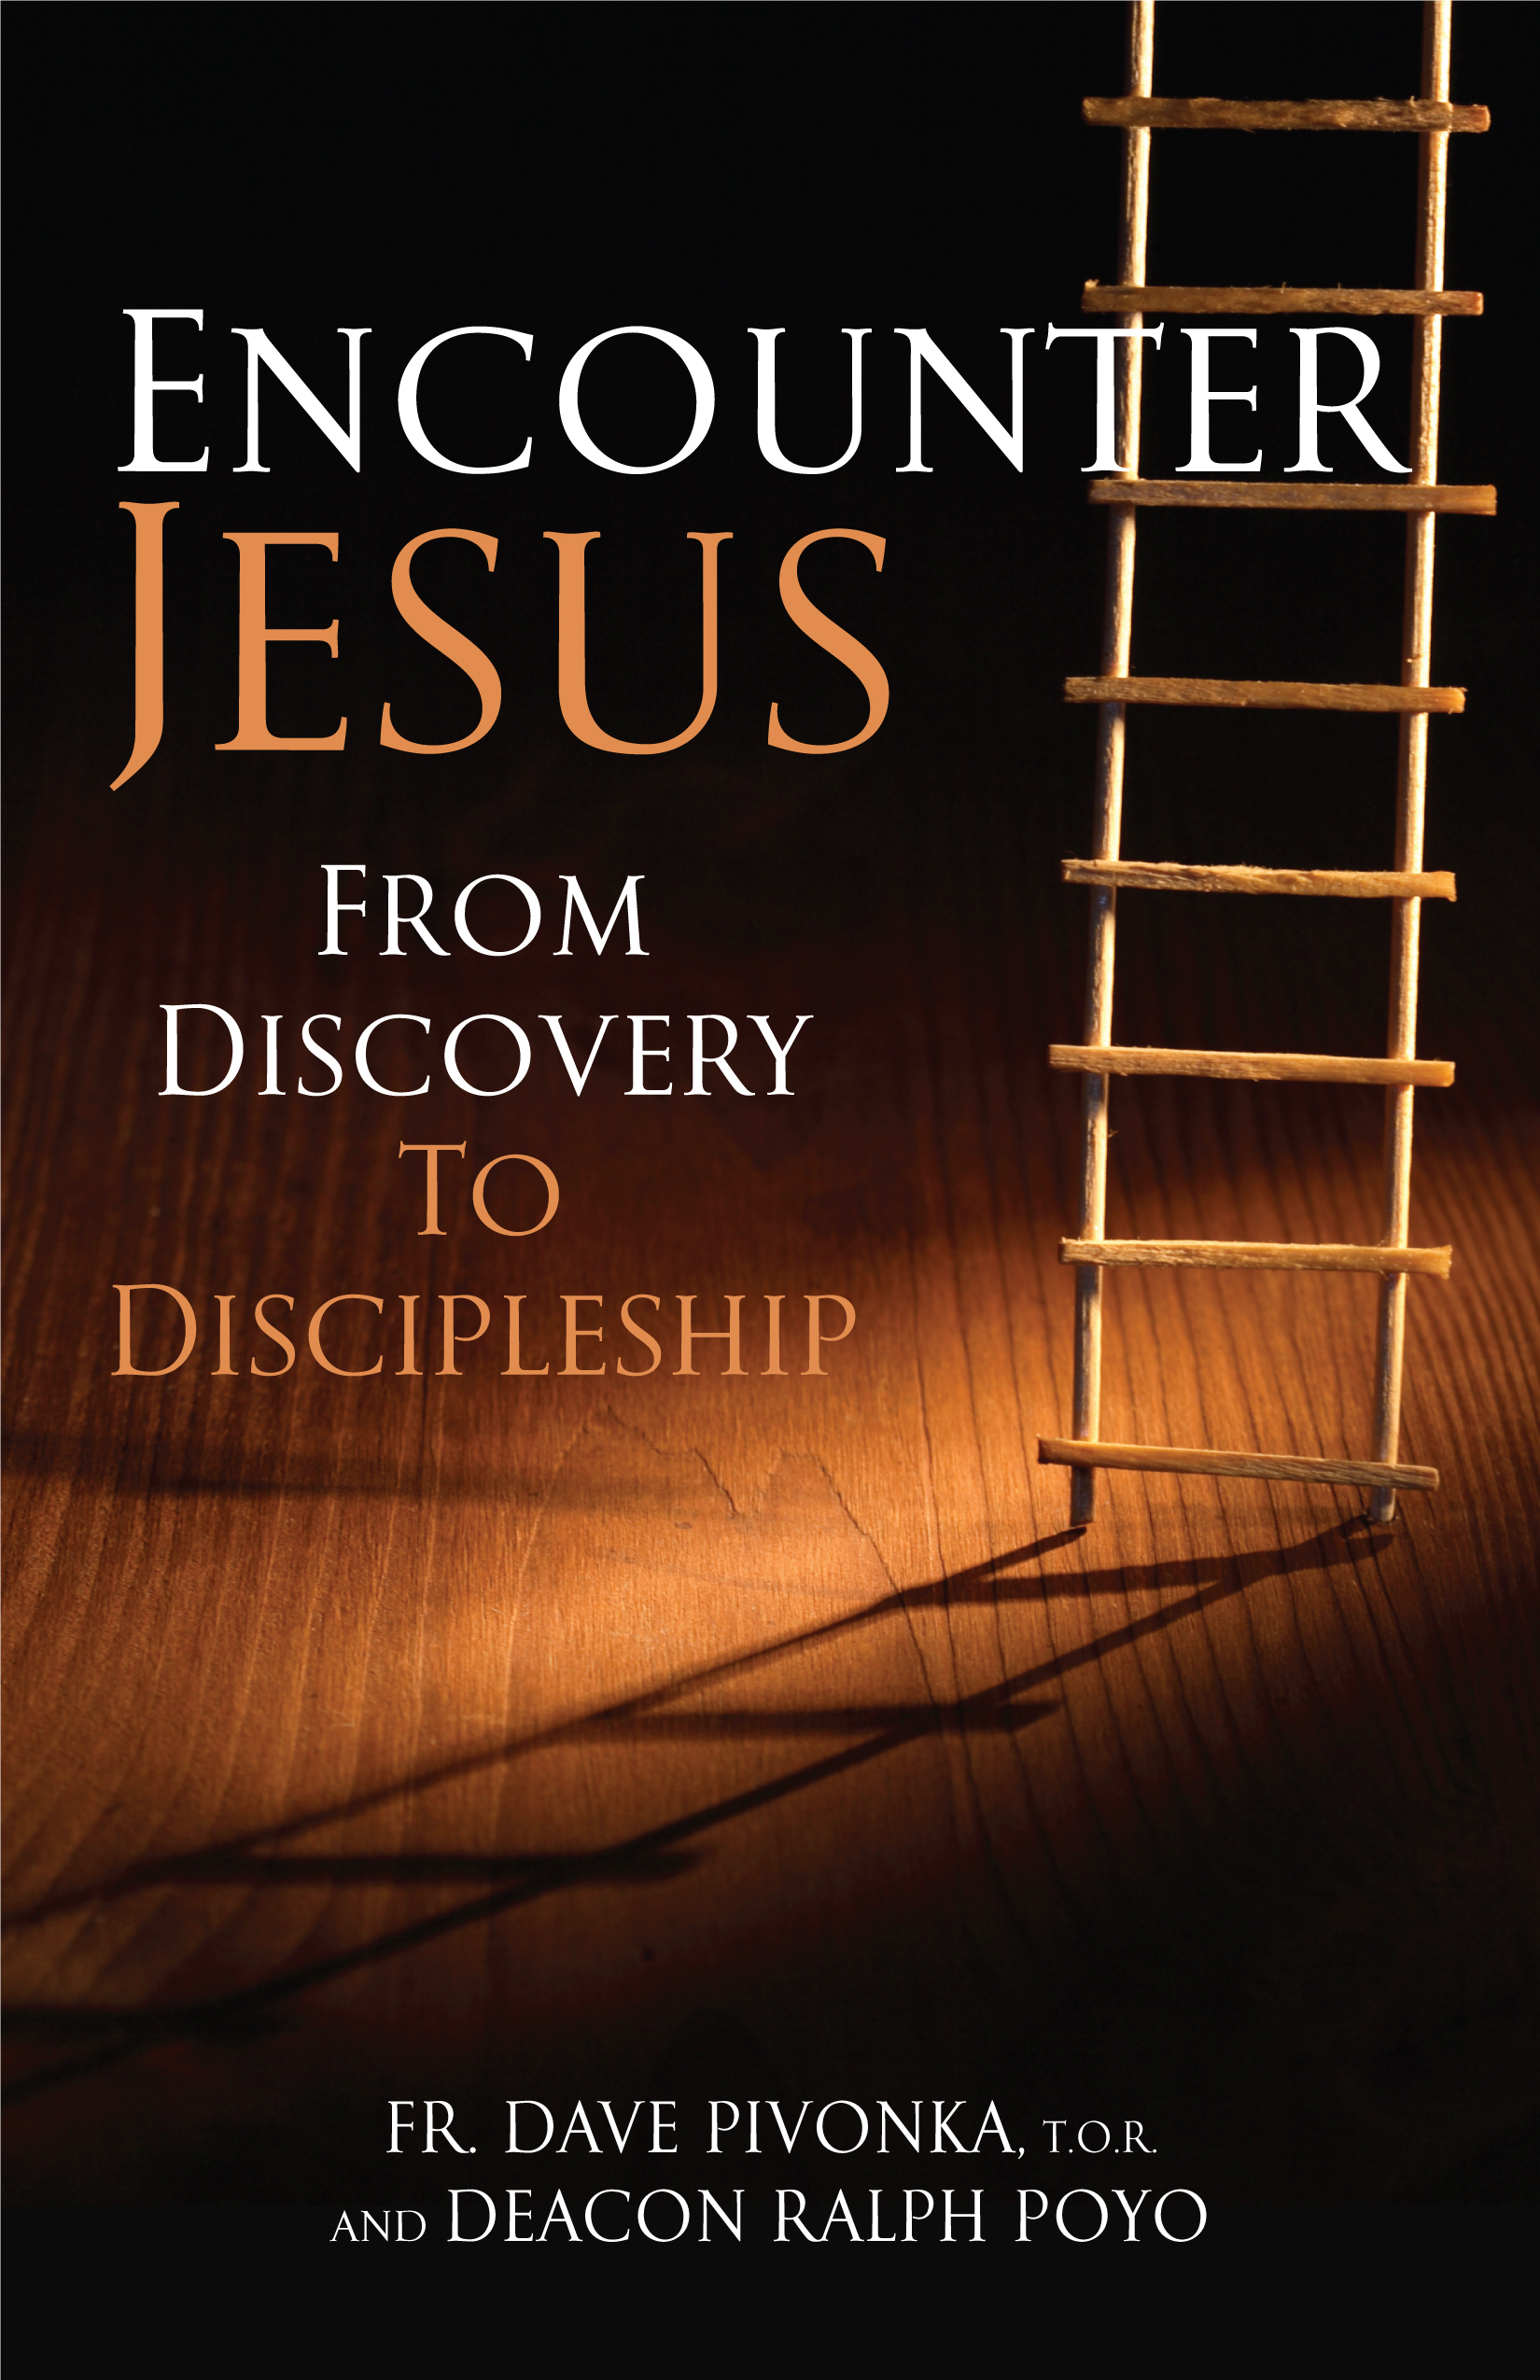 Encounter Jesus / Fr David Pivonka and Deacon Ralph Poyo